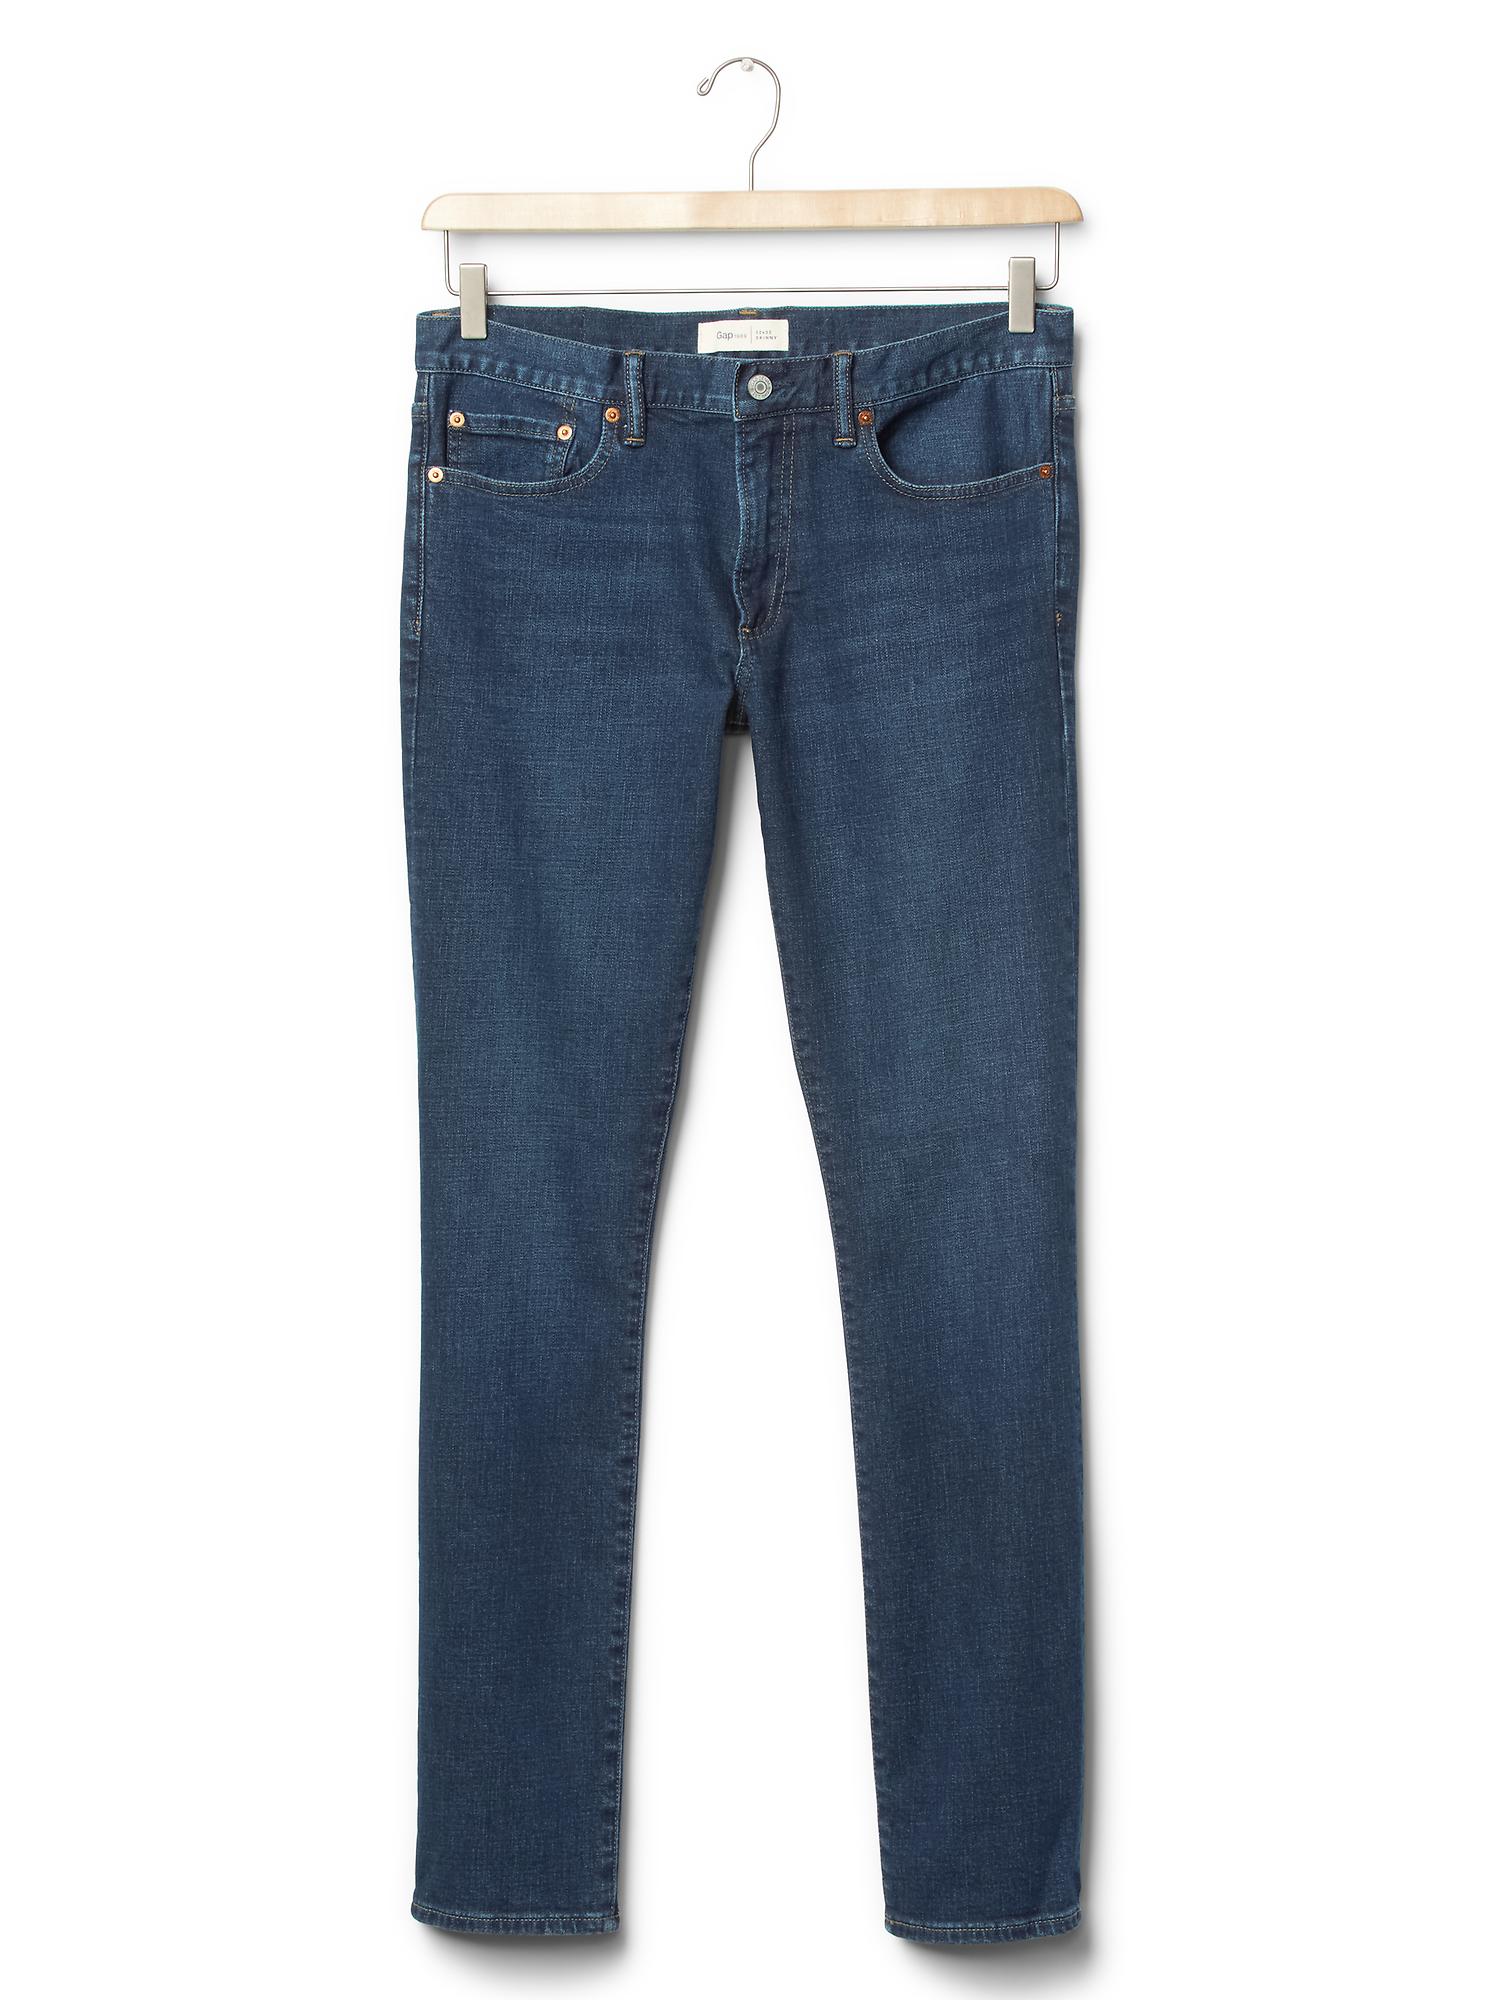 Gap Streç skinny-fit jean pantolon. 5